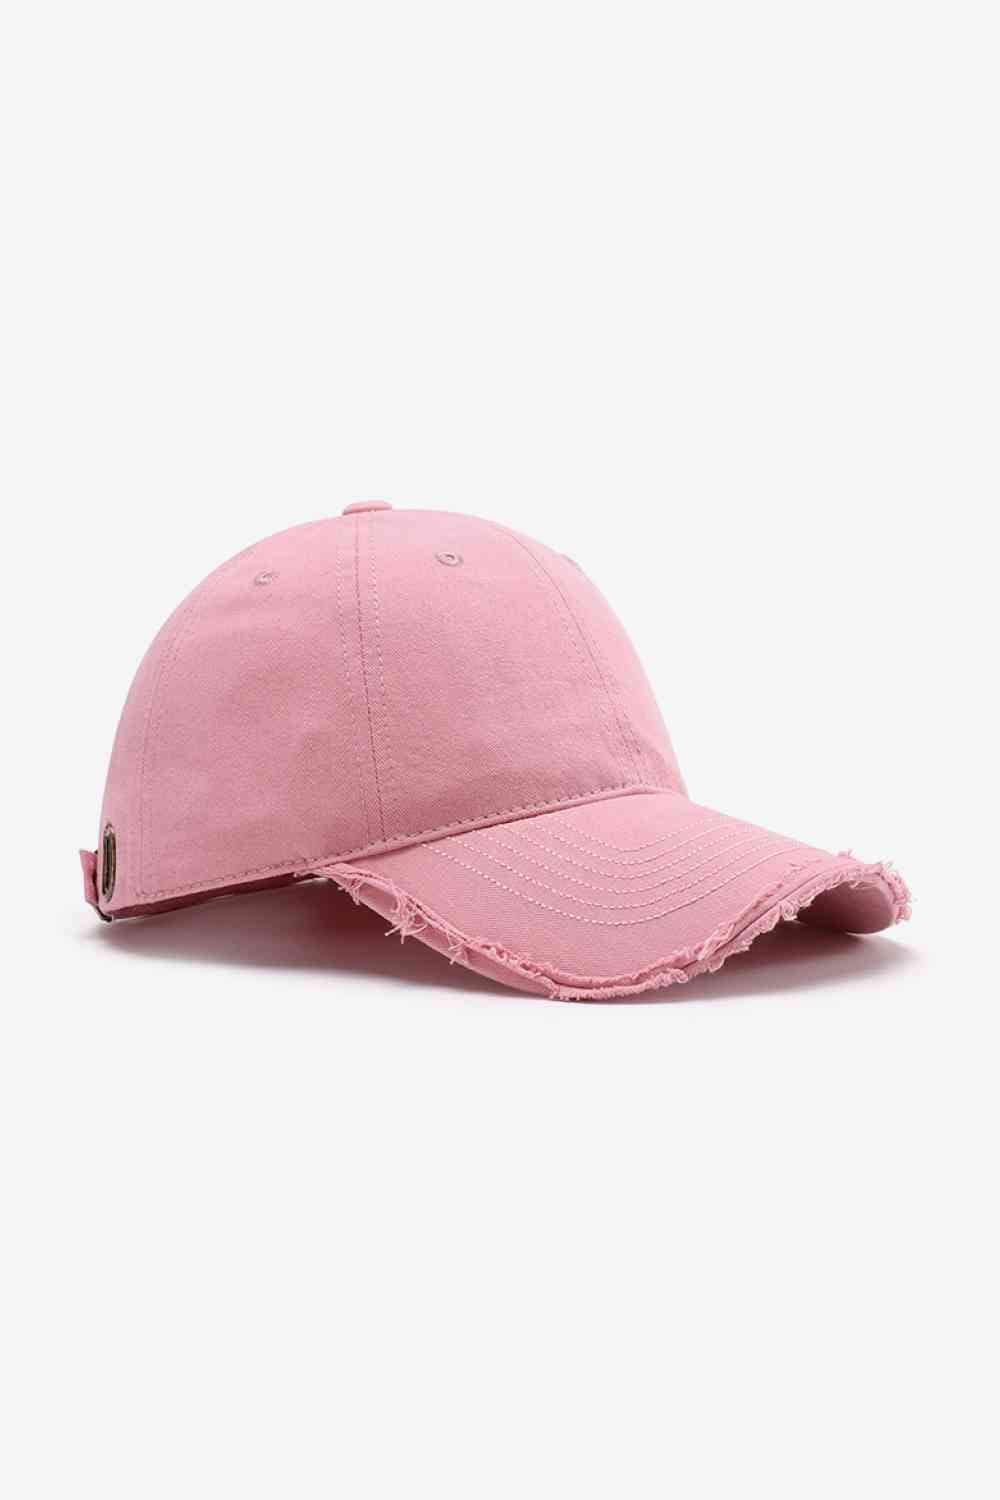 Distressed Adjustable Baseball Cap Blush Pink One Size